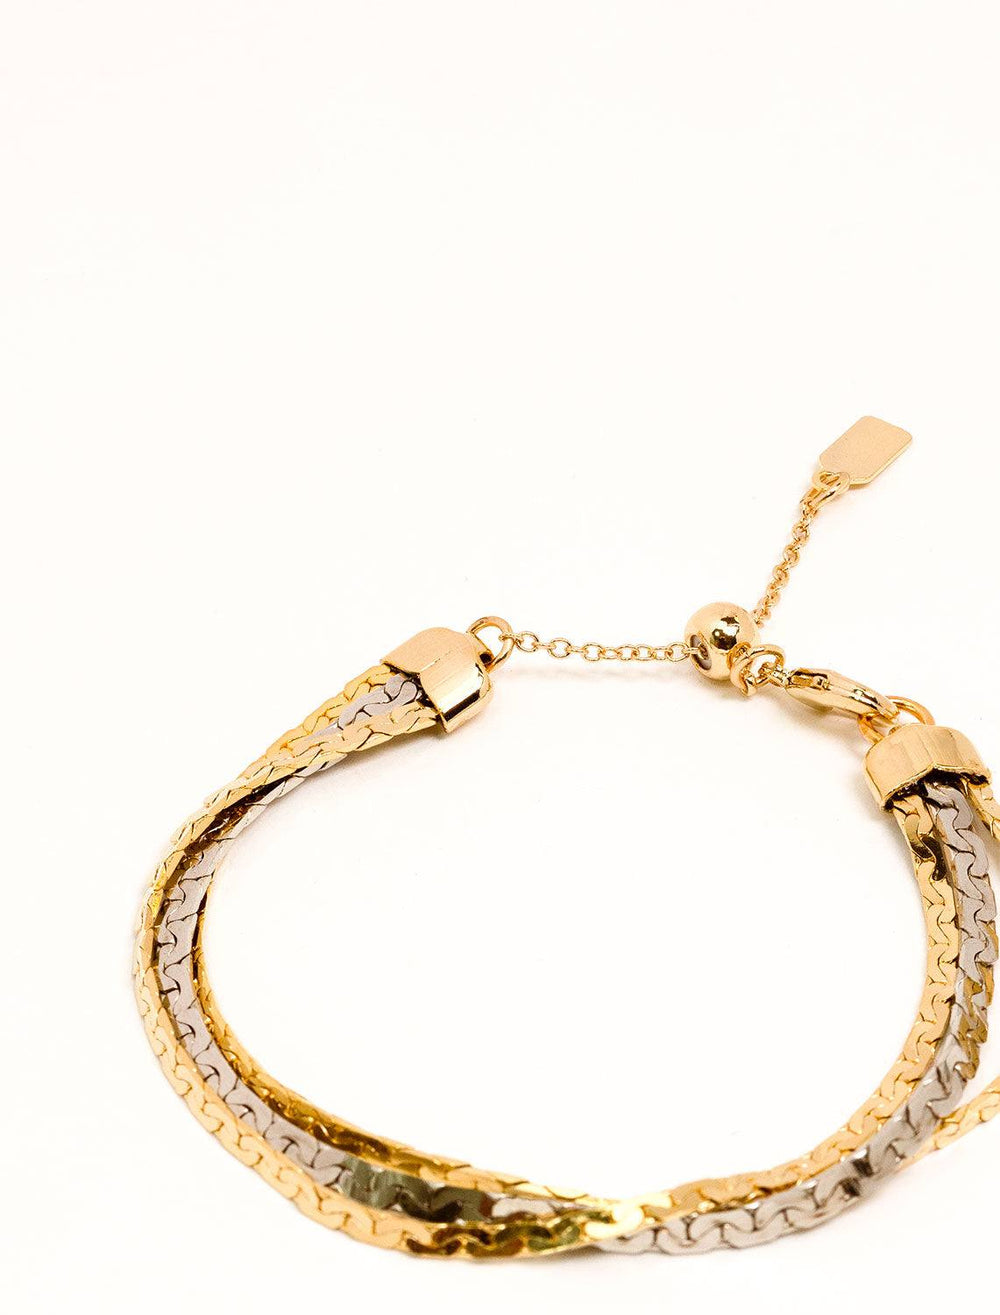 AV Max mixed metals herringbone chain bracelet - Twigs